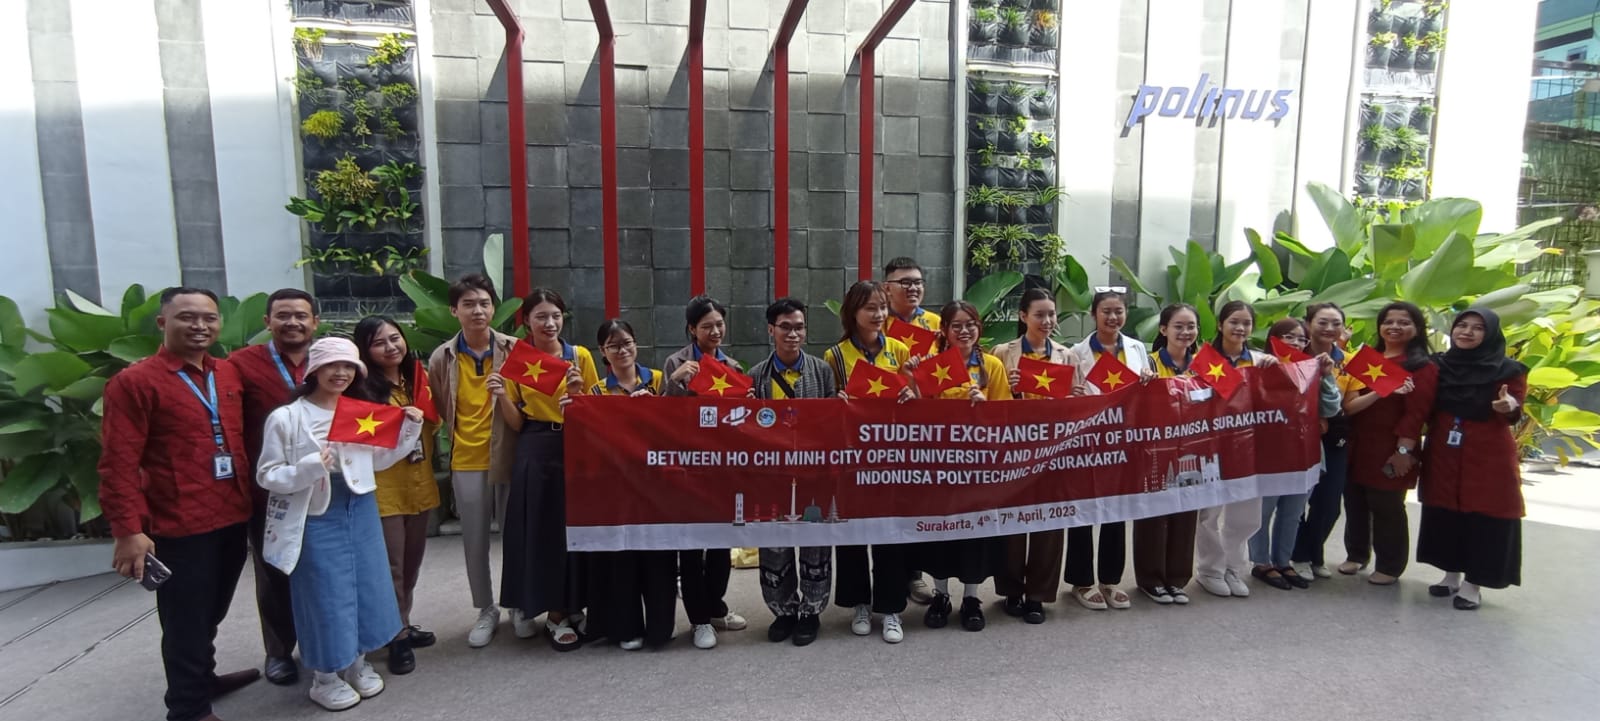 HO CHI MINH OPEN VIETNAM STUDENTS VISIT INDONUSA CAMPUS